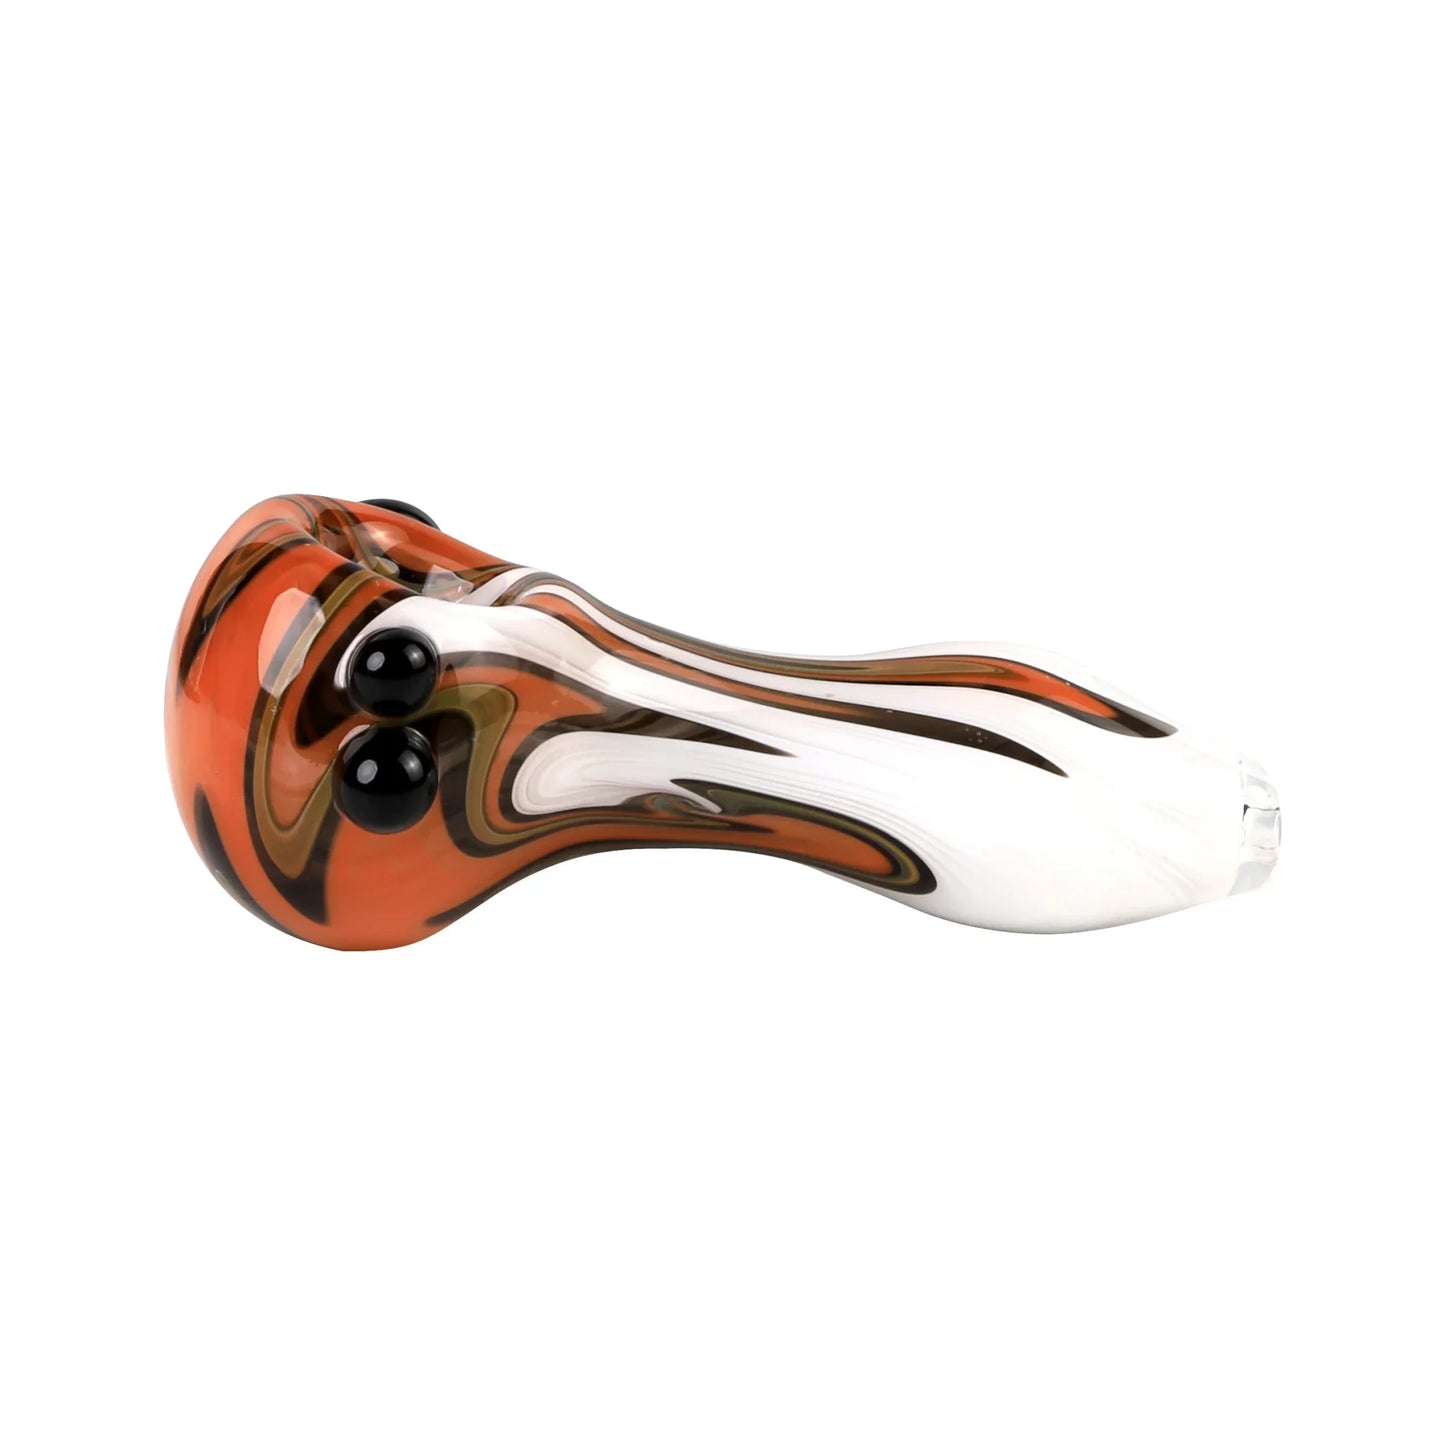 Reverse Spoon Pipe (Orange / White)